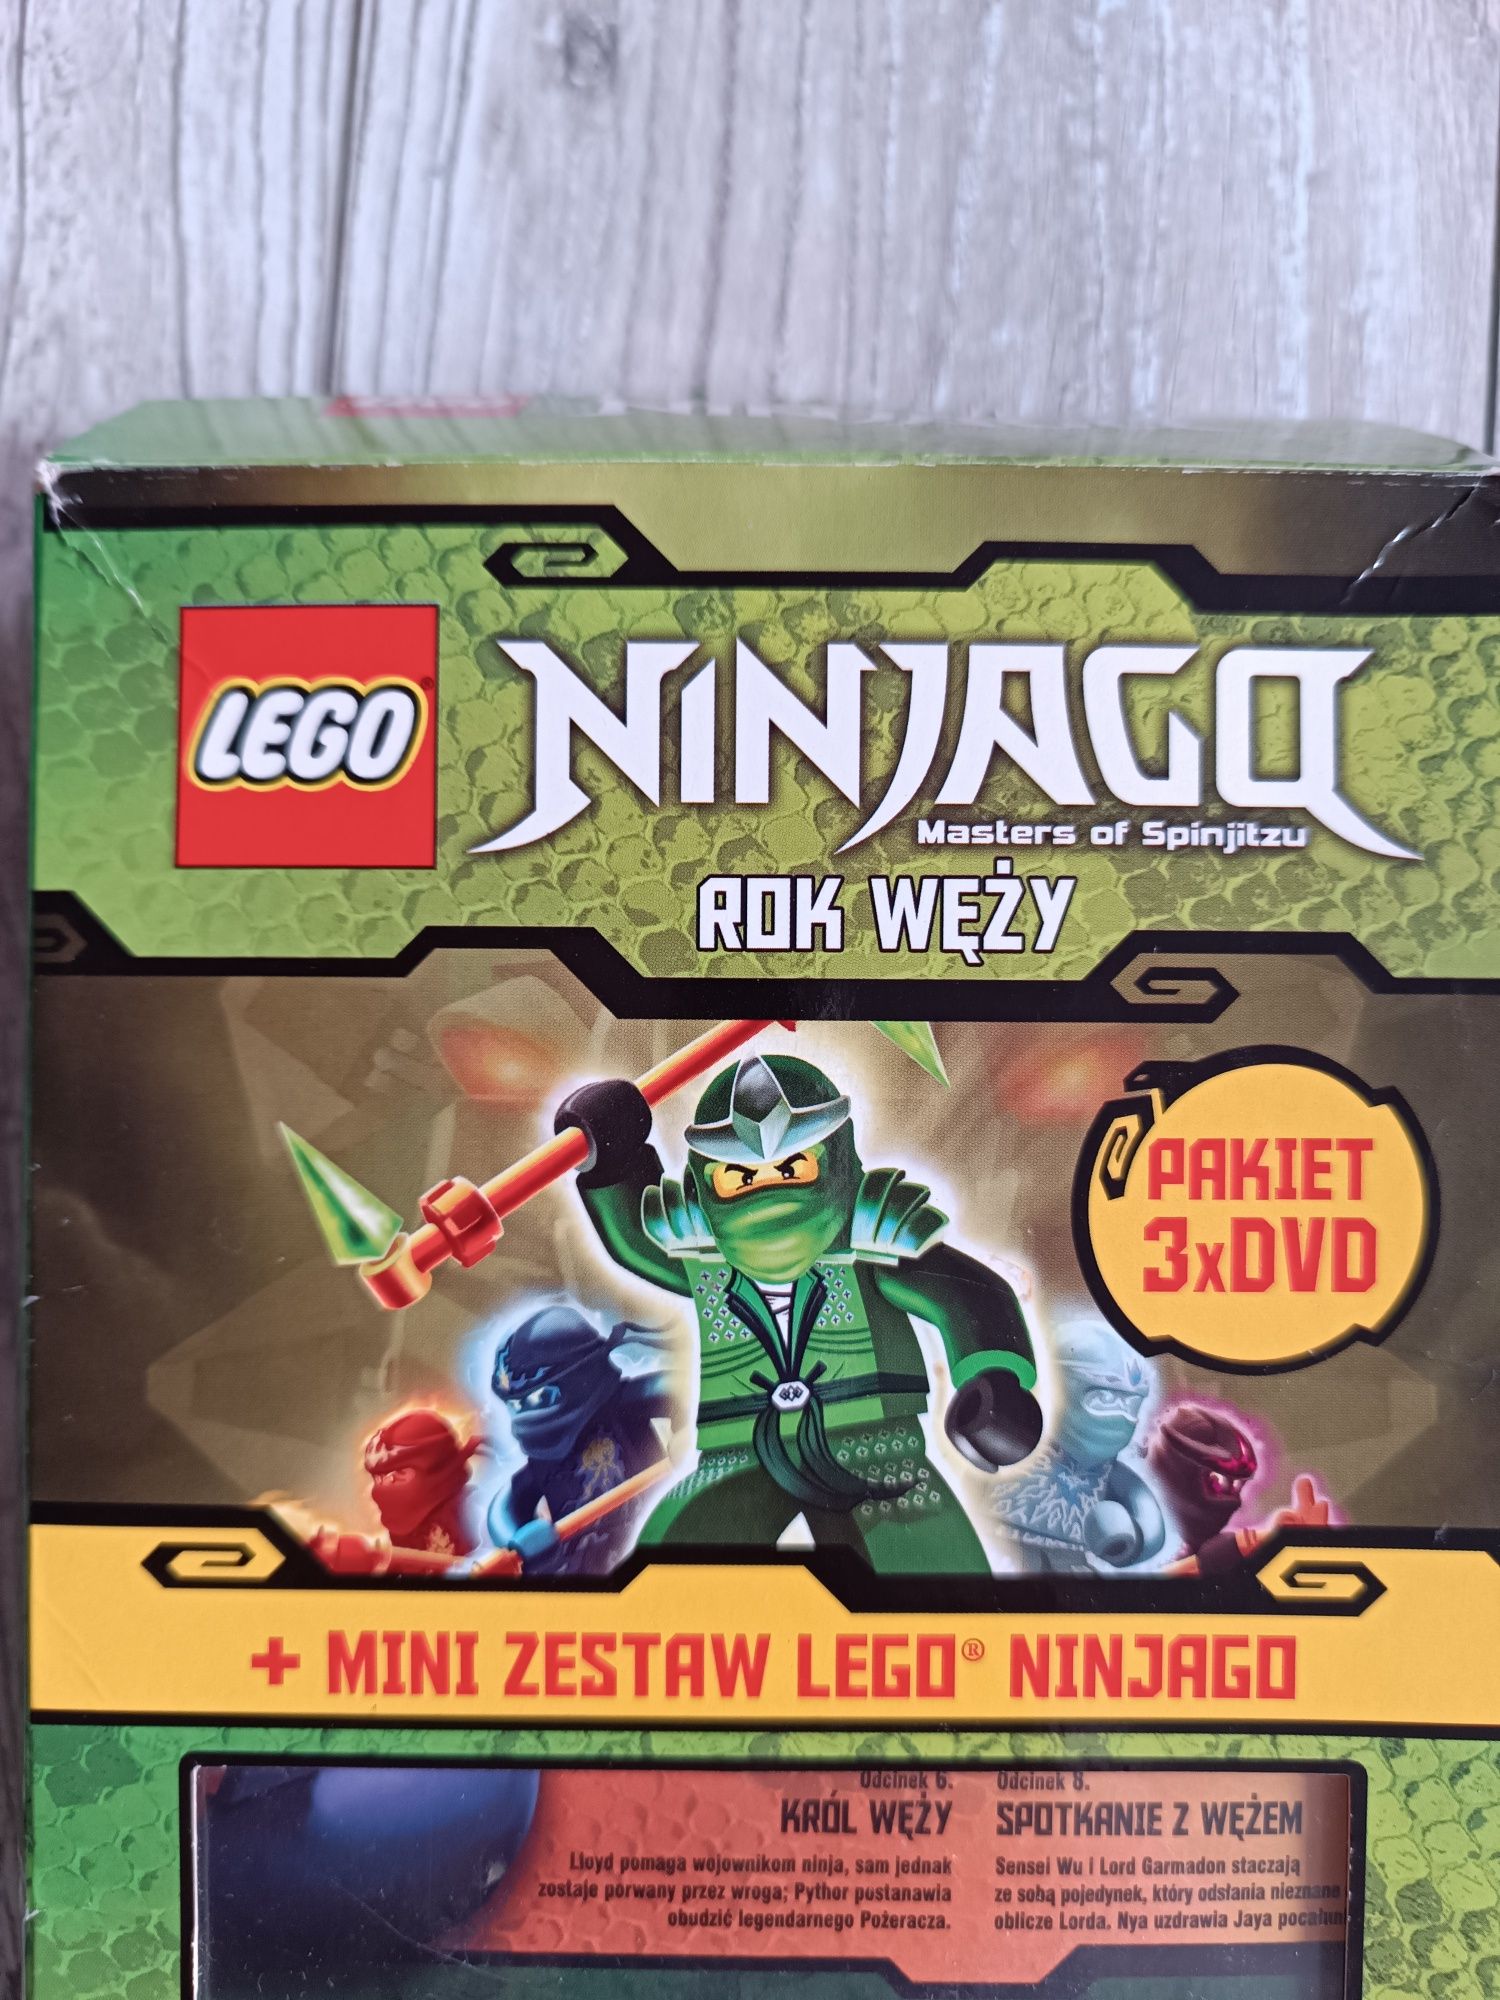 LEGO Ninjago 4 plyty dvd